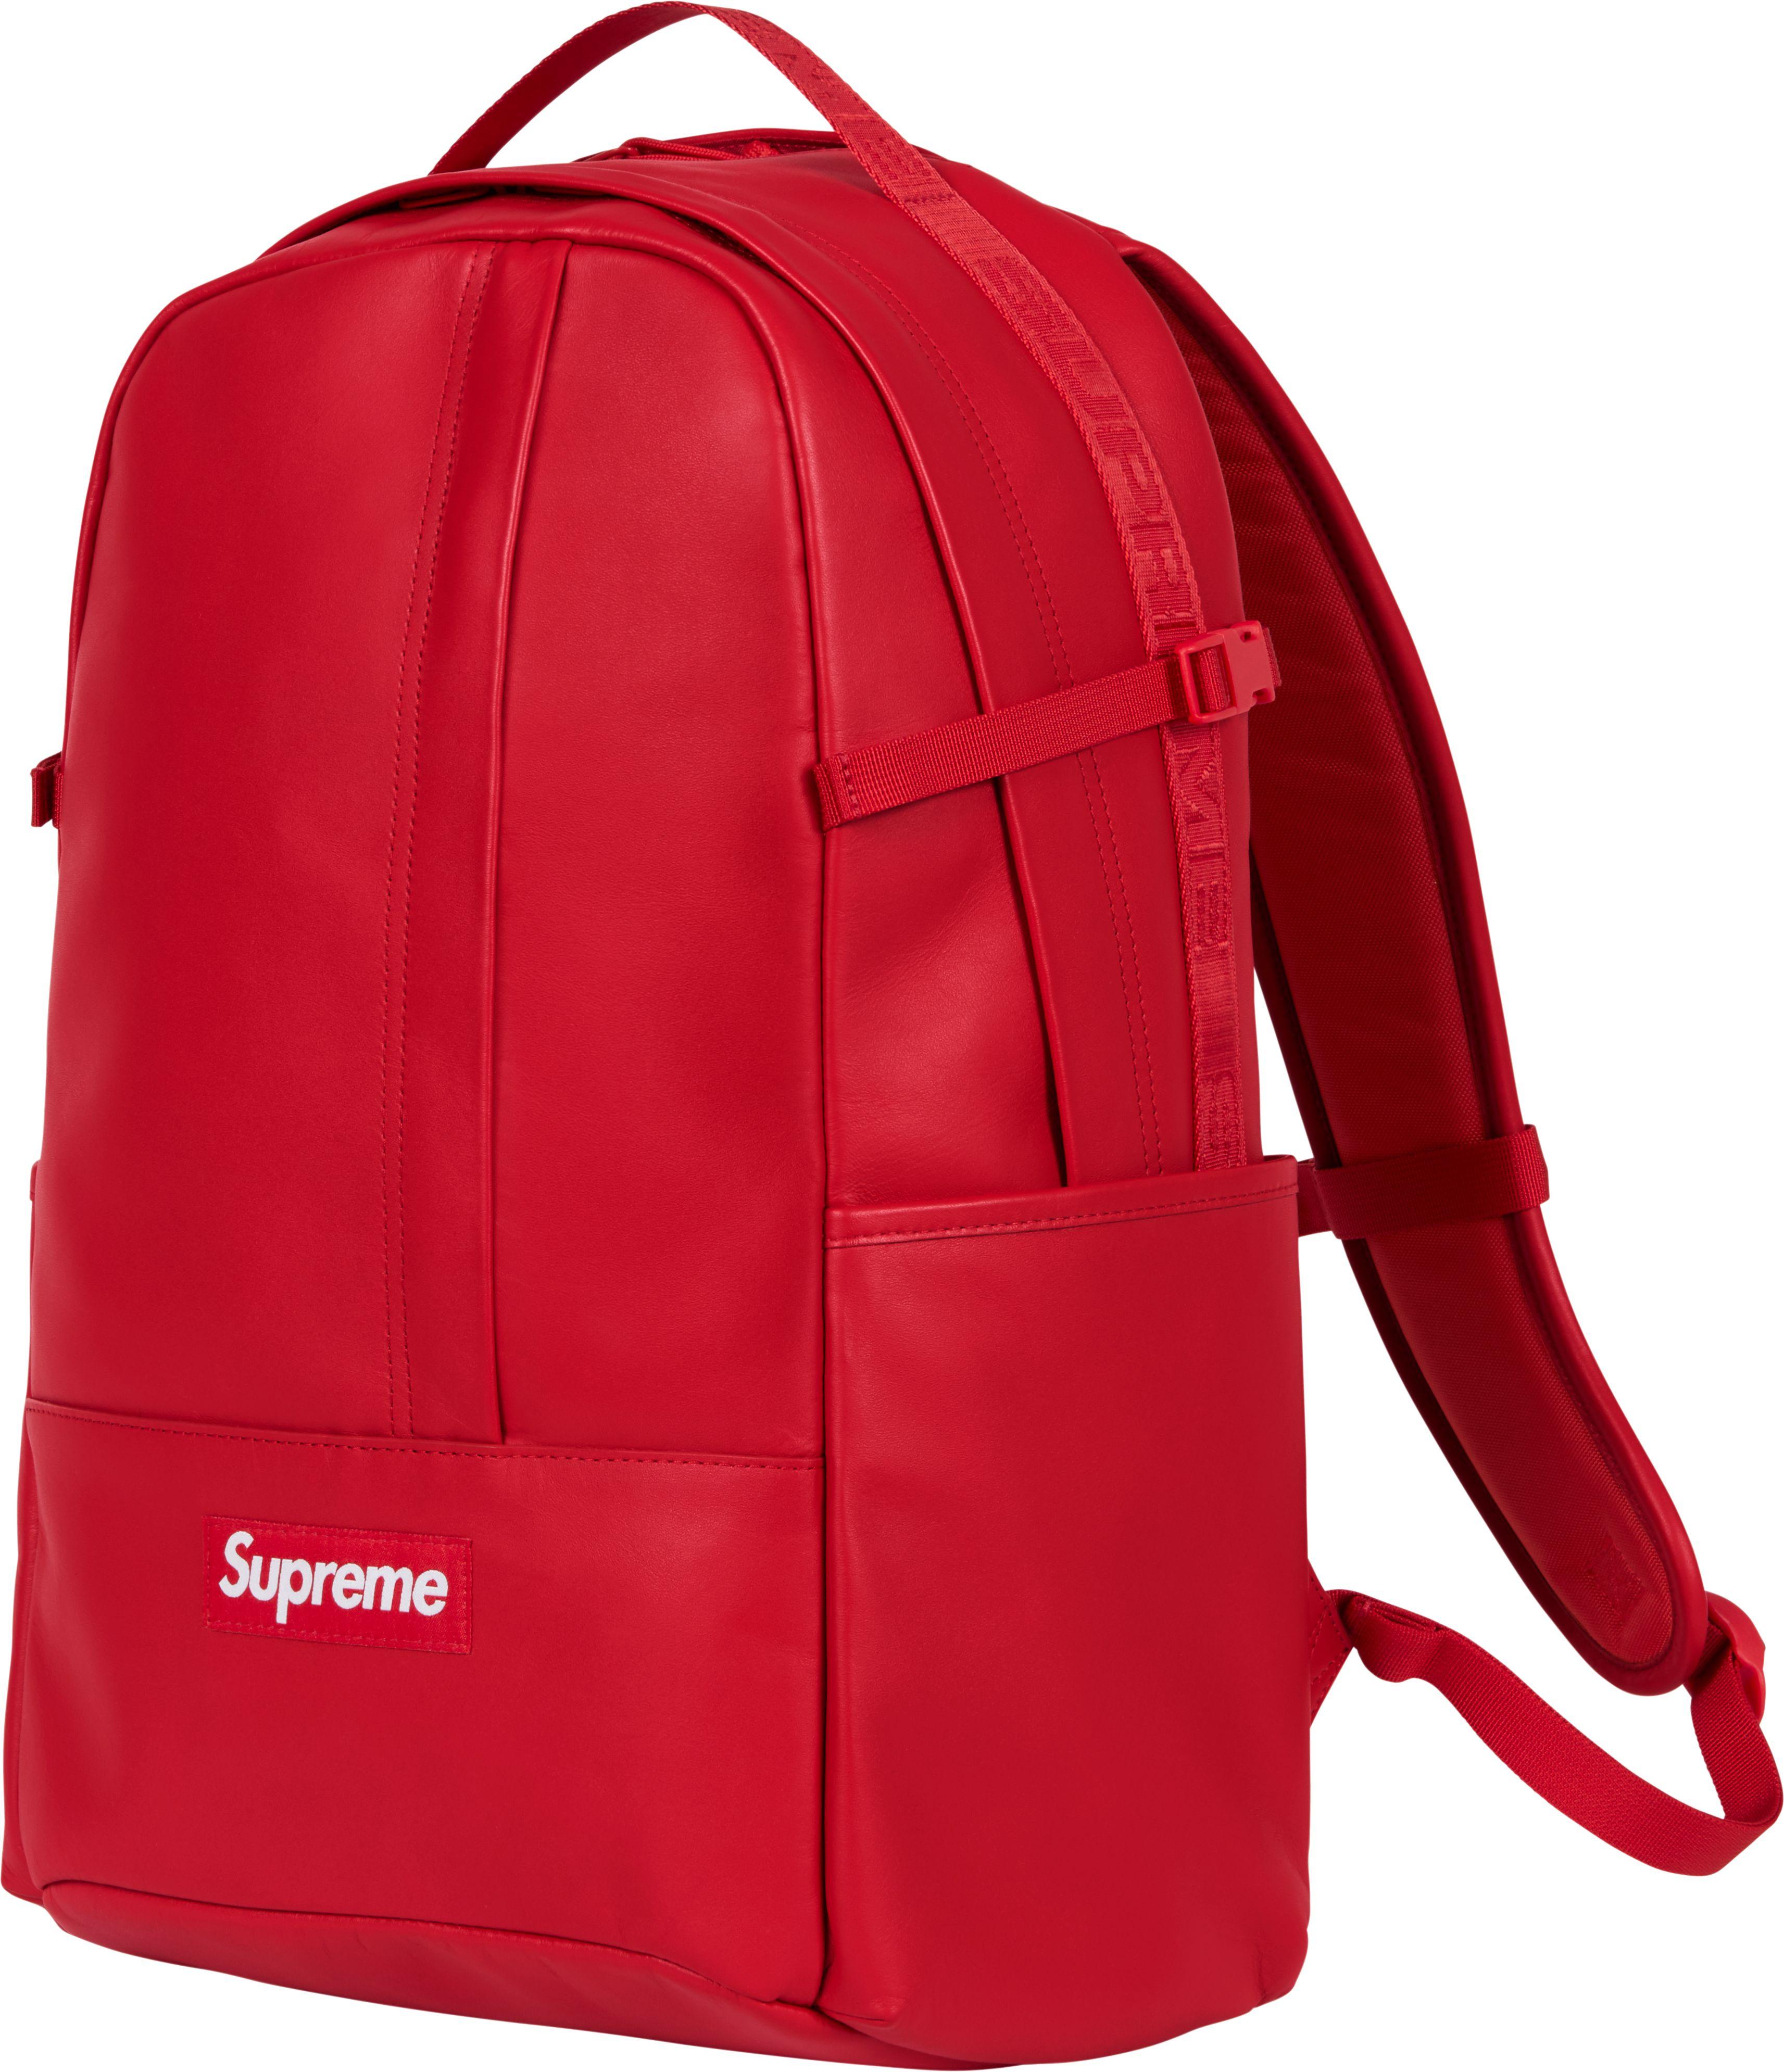 Leather Red Supreme Bag